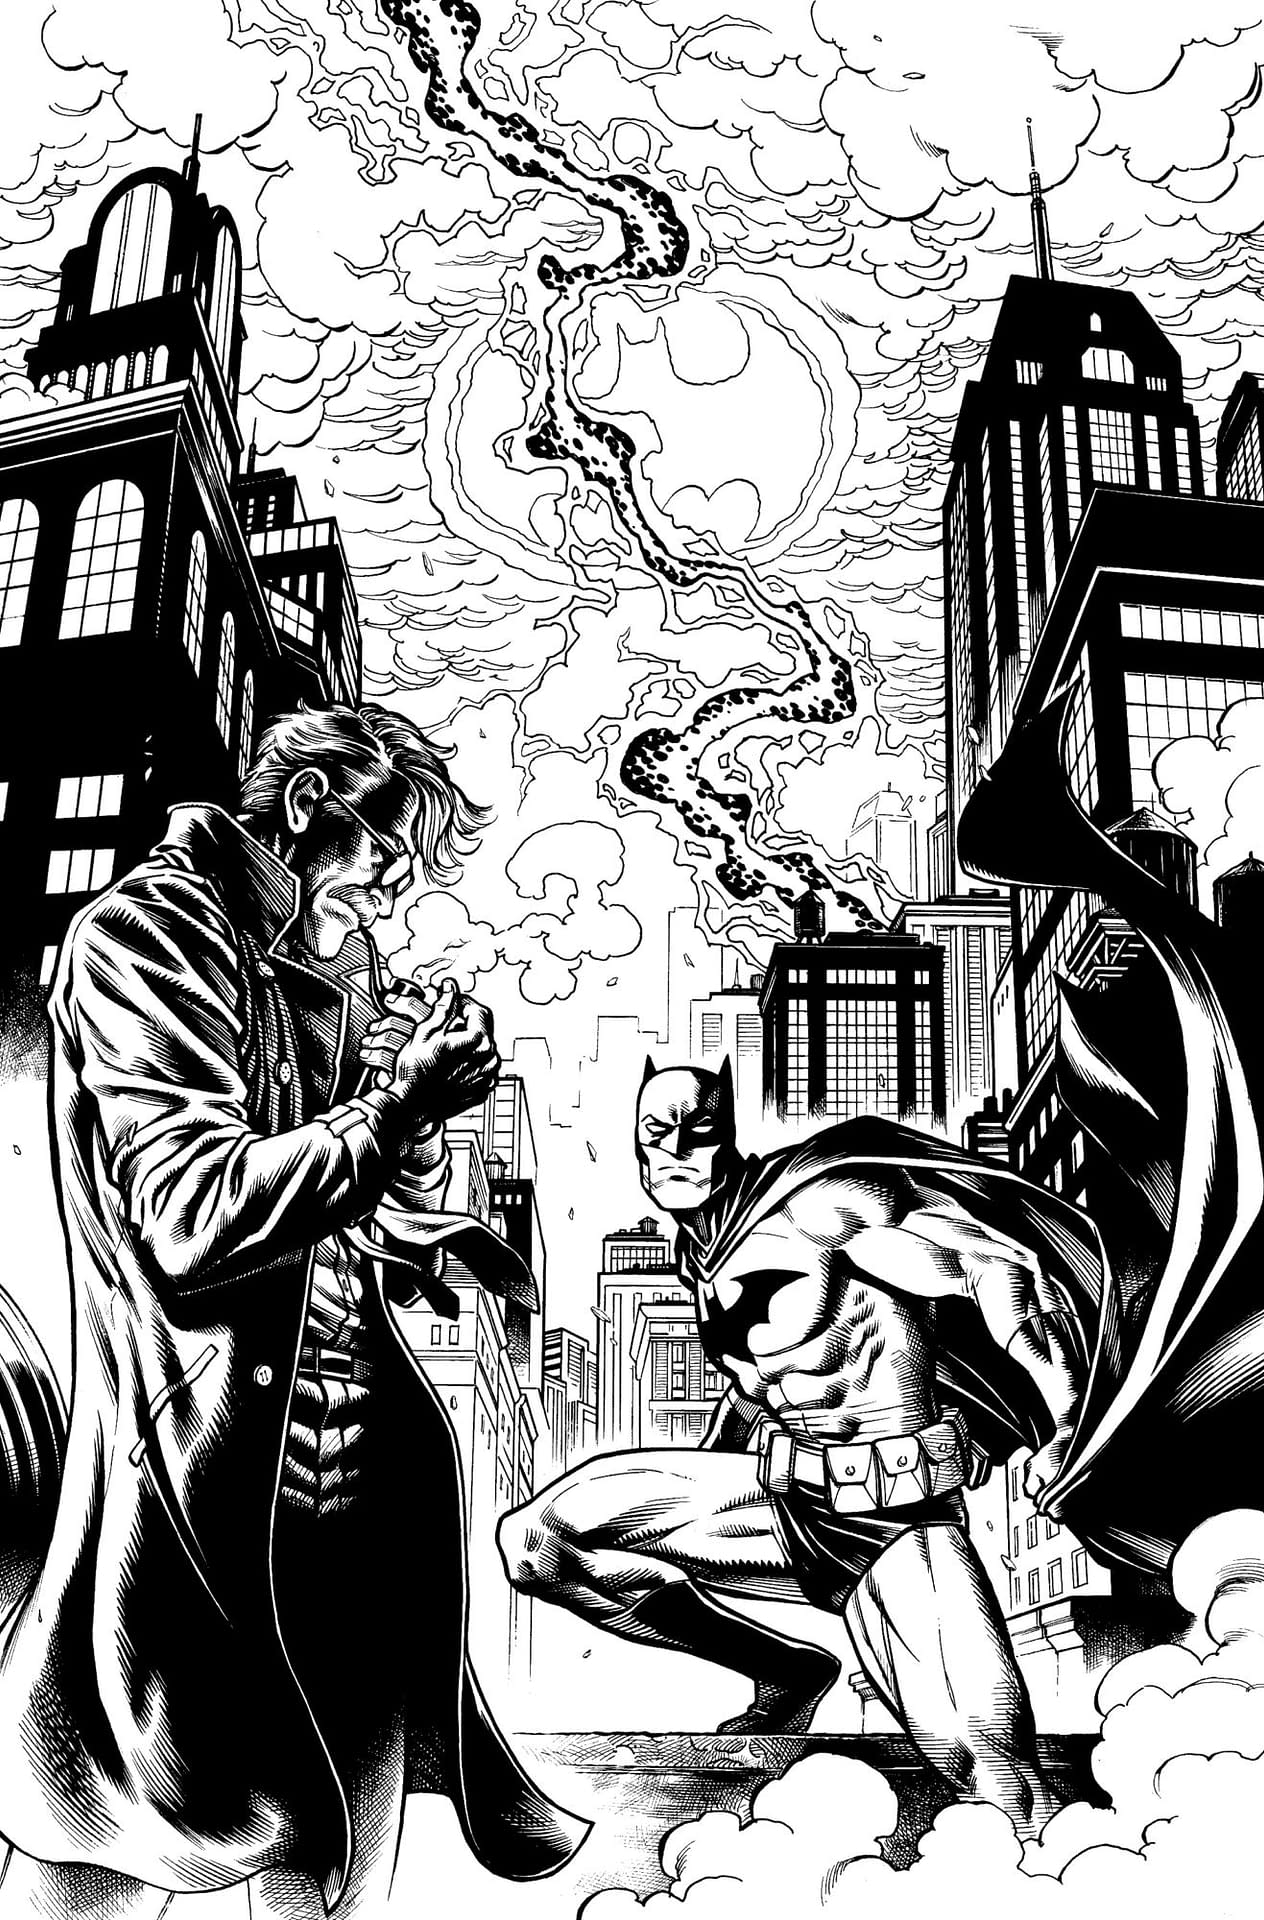 DC Publish Fortnite/Batman Comic With Unlock Codes, New Harley Quinn